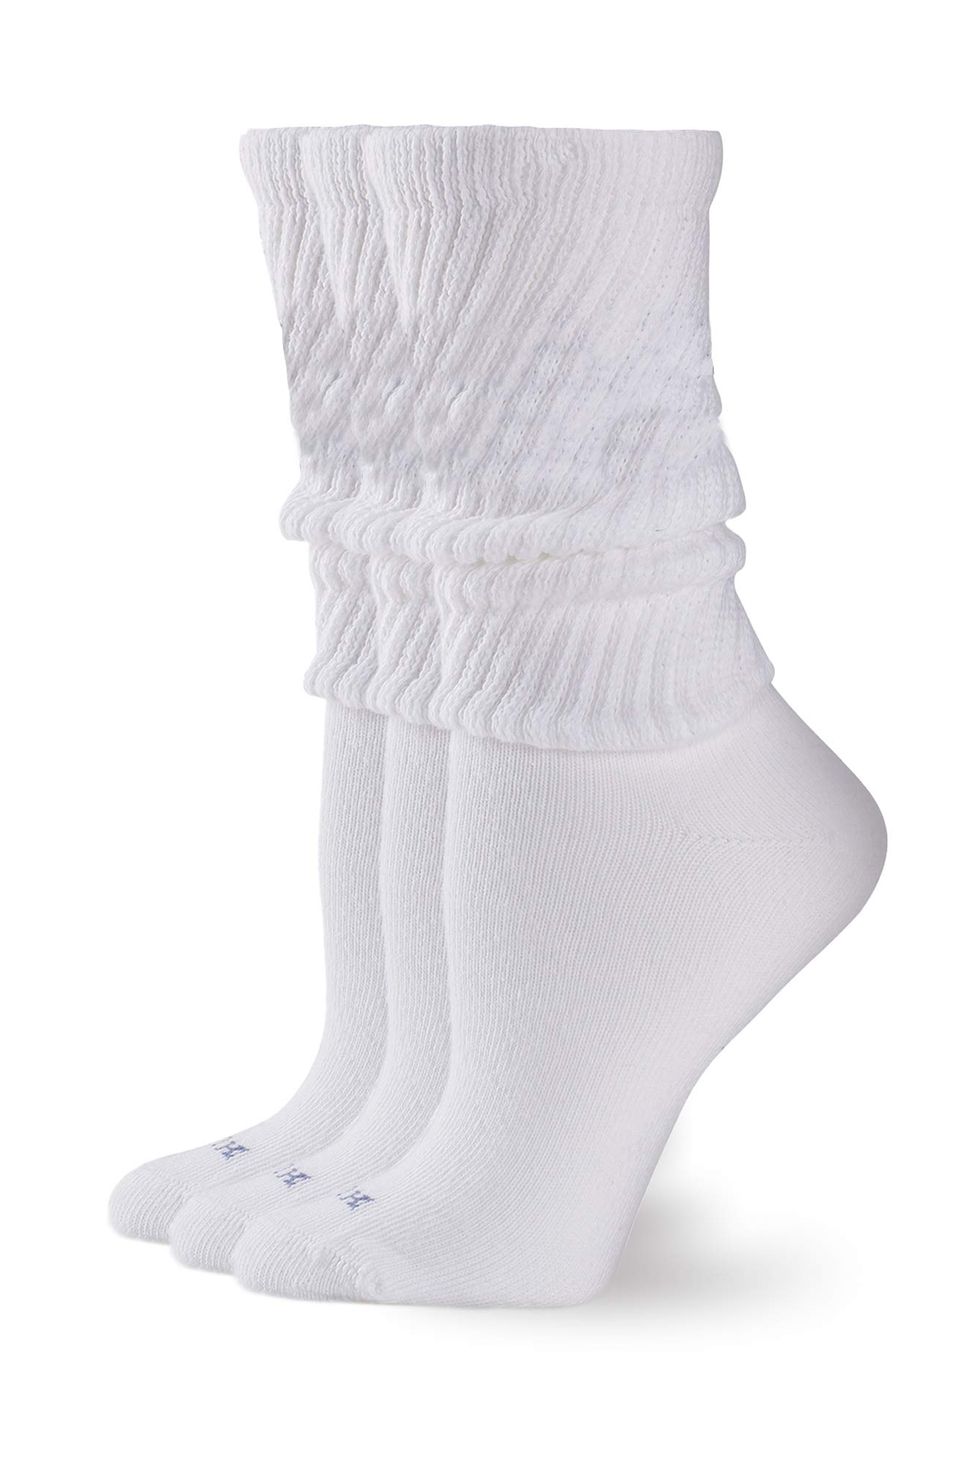 Socks & Hosiery Womens Underwear Apparel Cute Printed Short Women